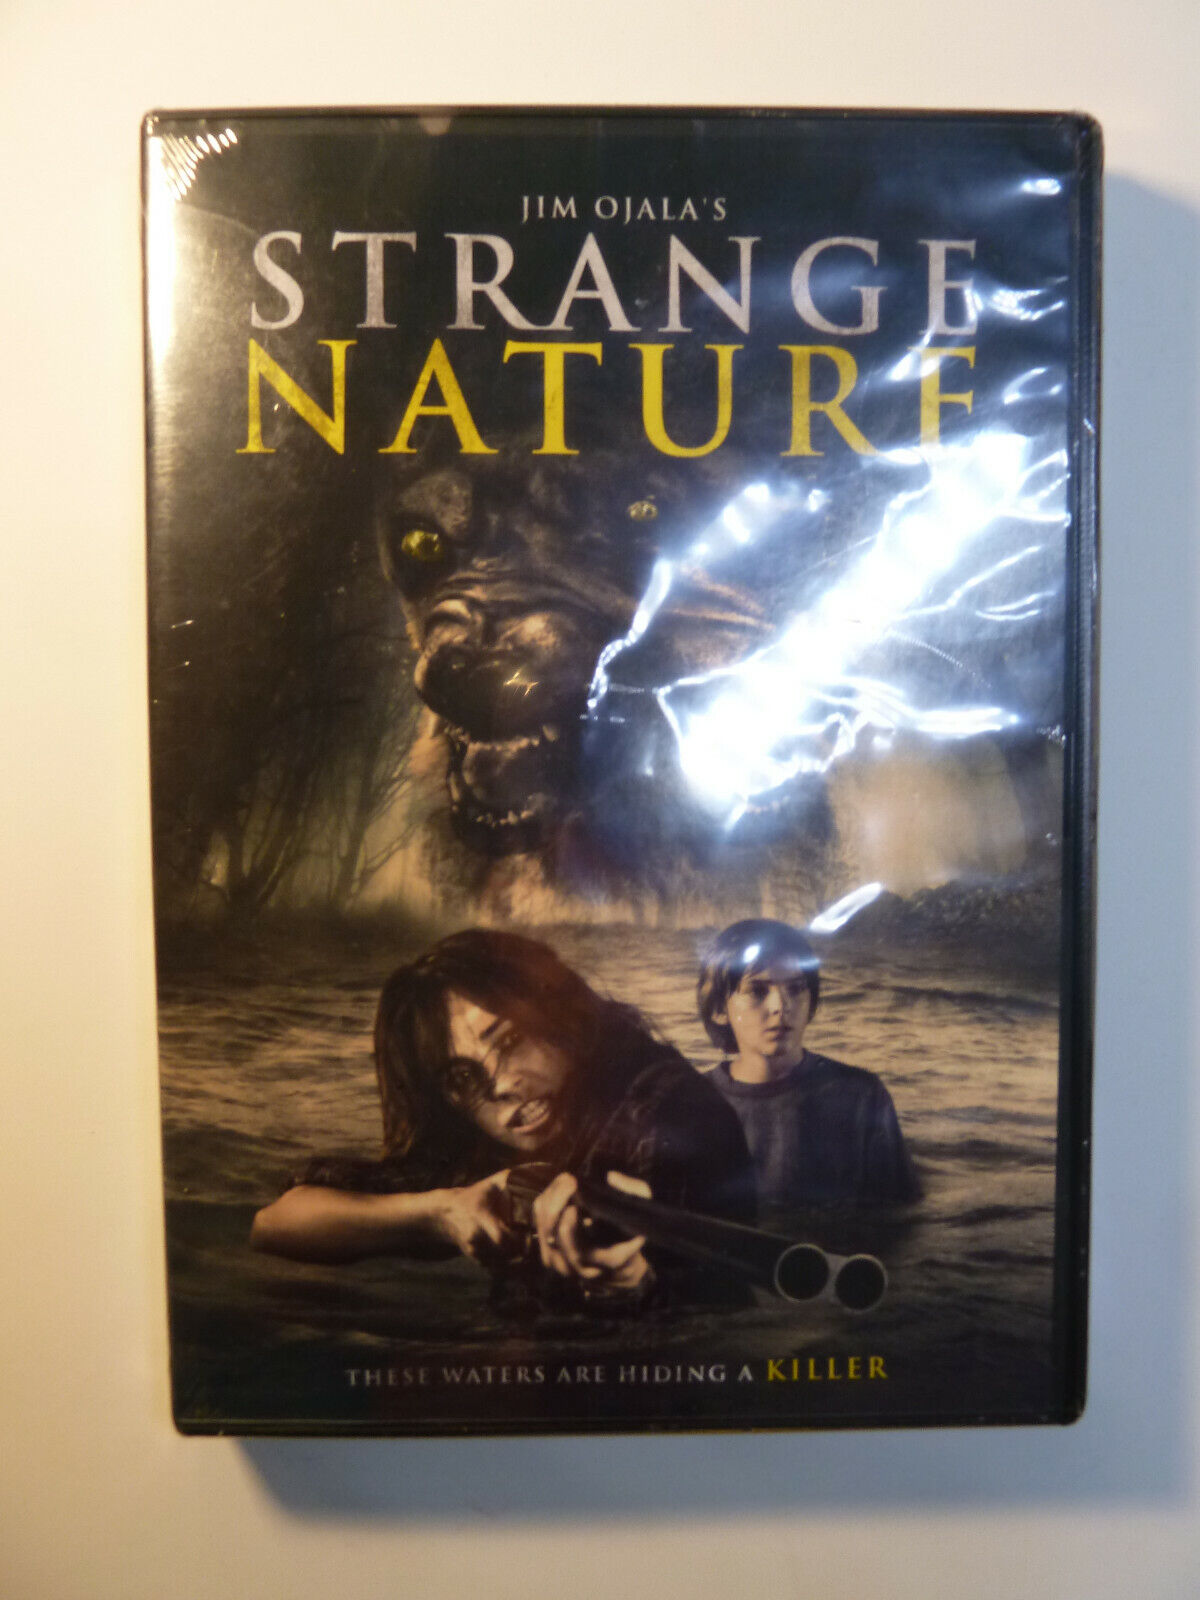 Strange Nature DVD indie horror movie mutant animals Jim Ojala 2018 NEW!  767685159552 | eBay